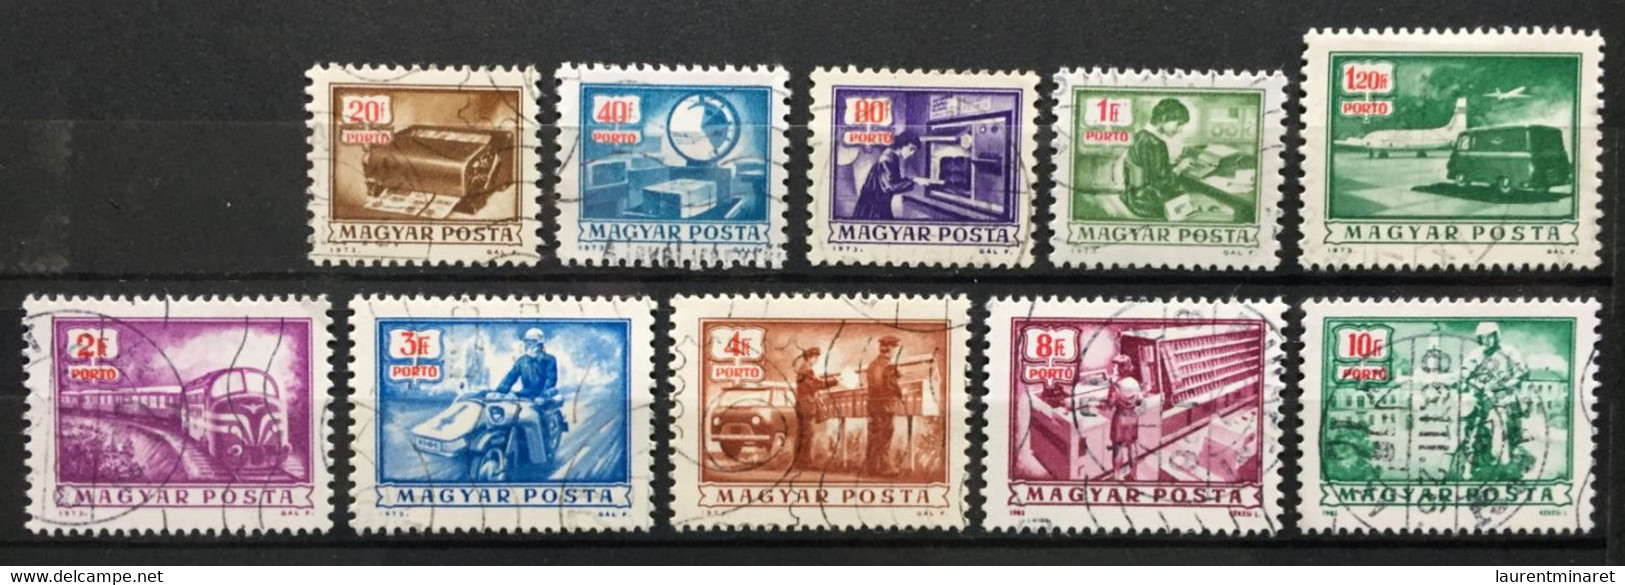 HONGRIE / TIMBRES-TAXE / 1973 - 1985 /  N° Y&T : 235 à 244 - Dienstmarken